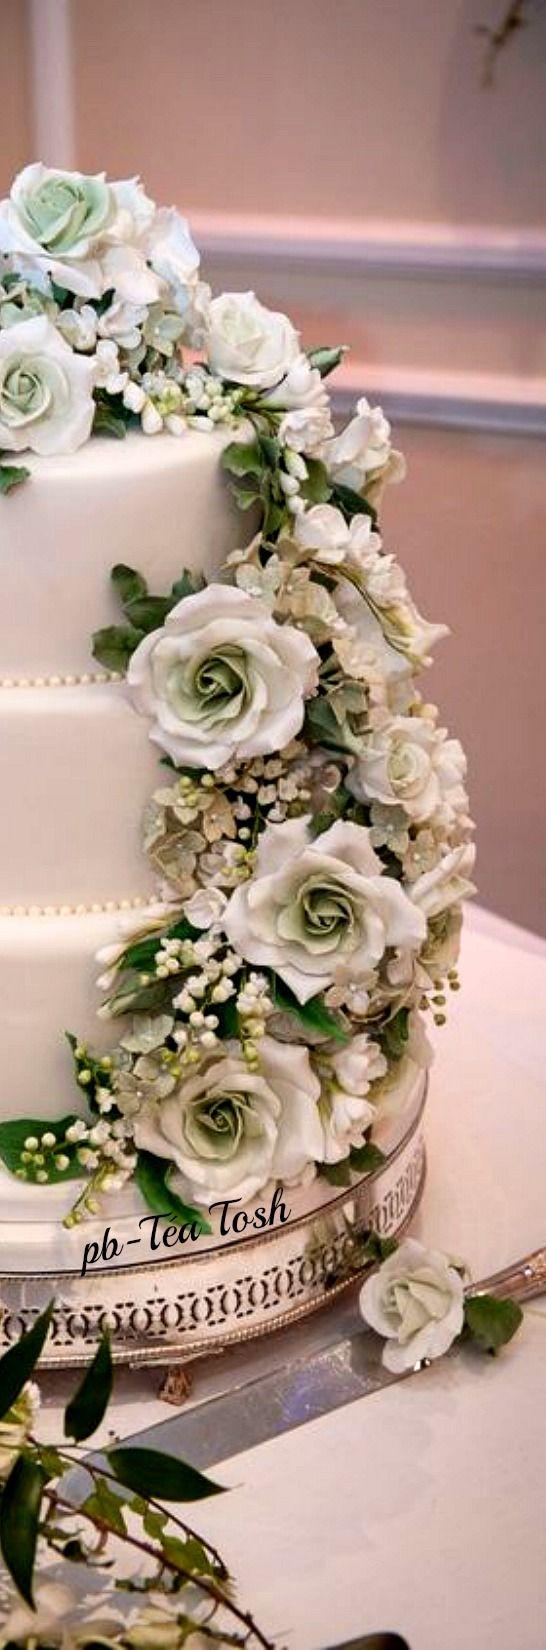 Wedding - Beautiful Floral Wedding Cake